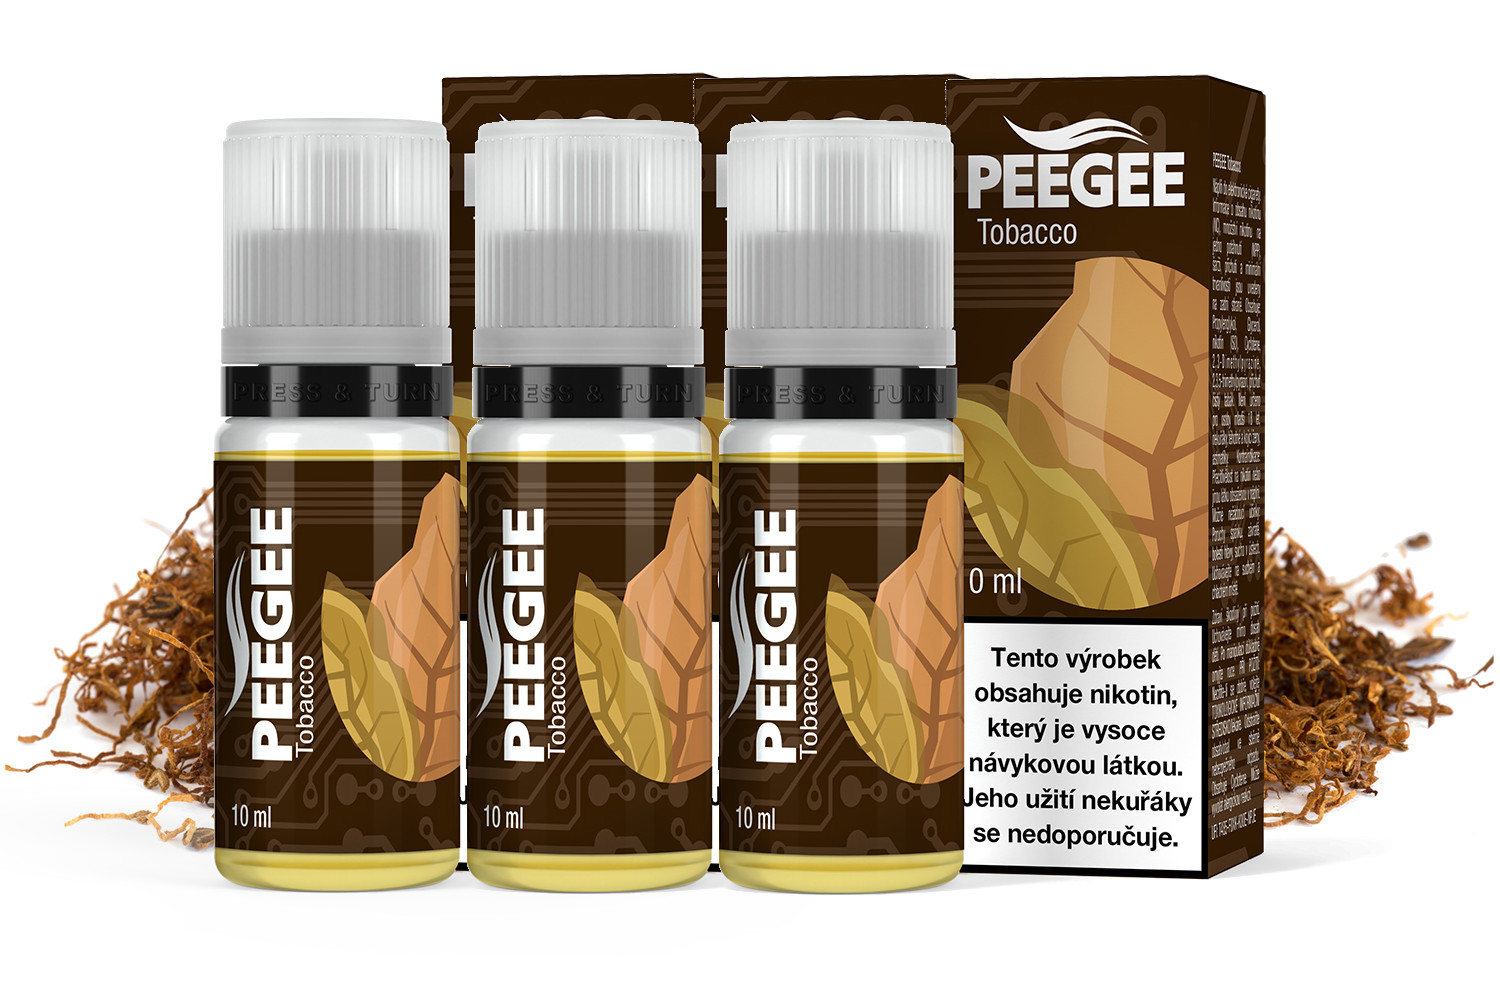 PEEGEE - Čistý tabák (Tobacco) 3x10ml Obsah nikotinu: 18mg